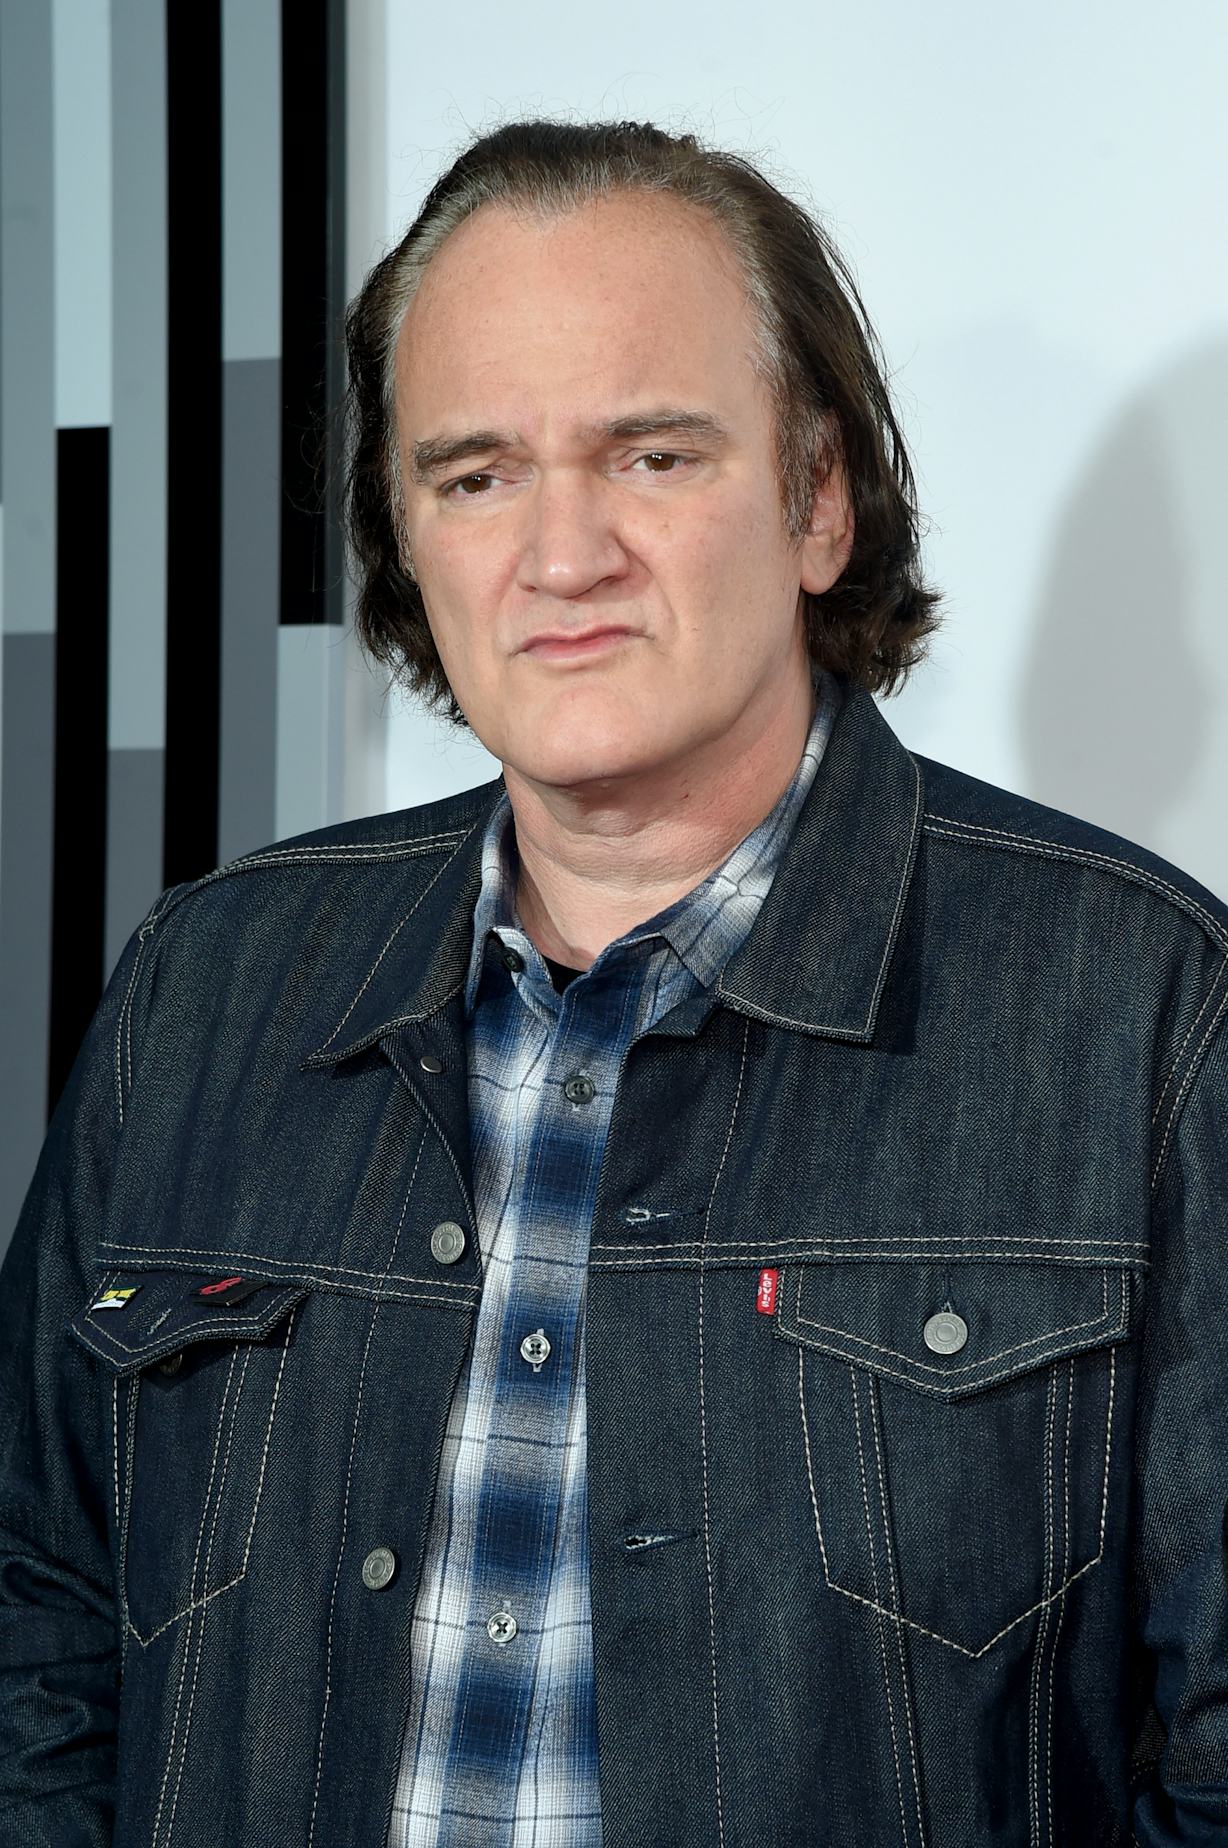 Quentin Tarantino Defended Roman Polanski Against Claims